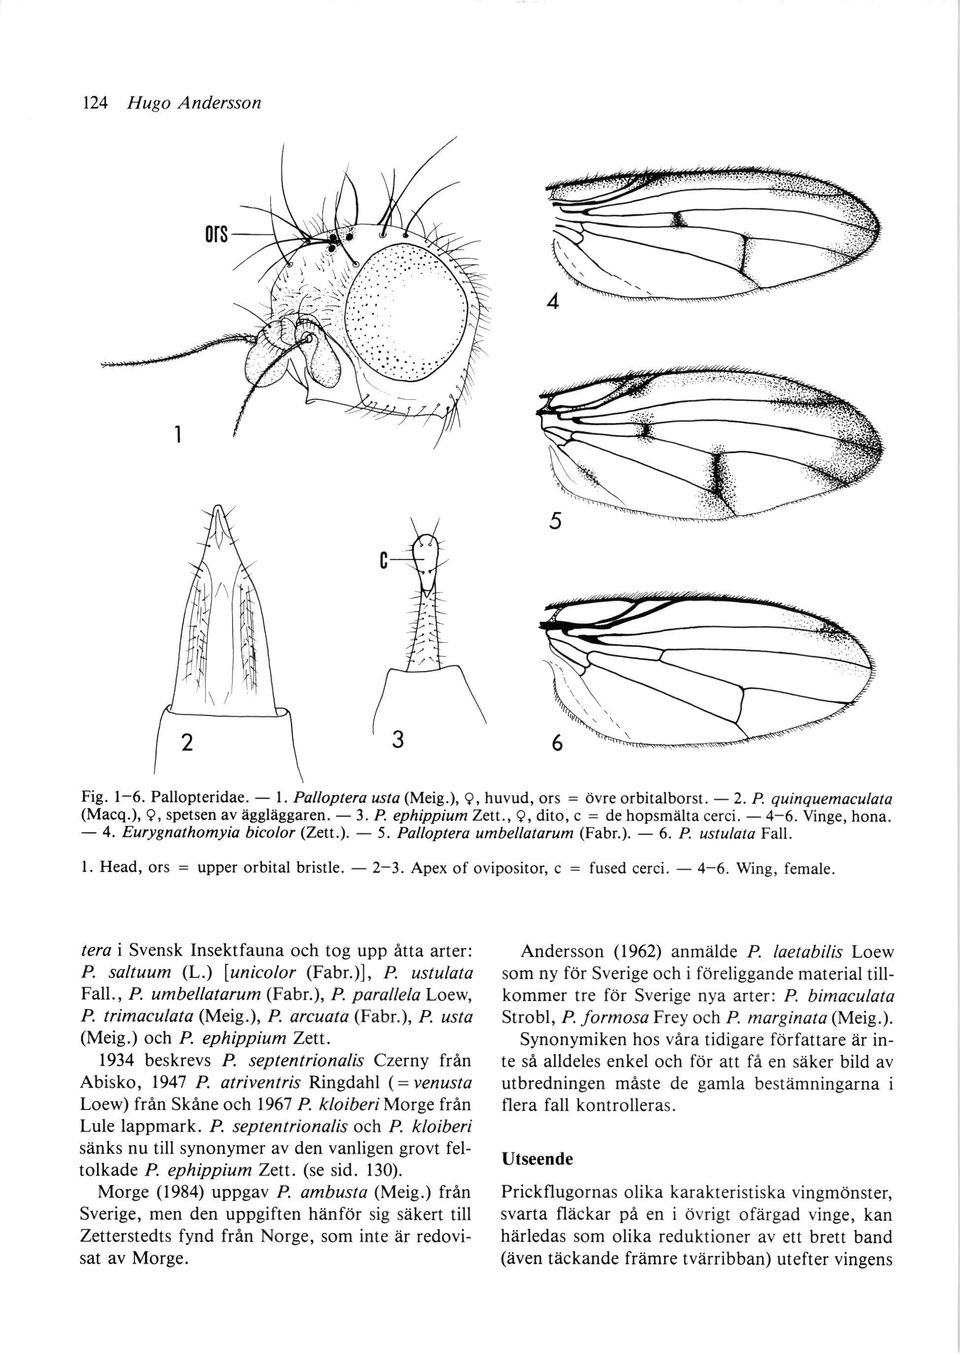 , L dito, c = de hopsmiilta cerci. 4. Eurygnathomyia bicolor(zett.). 5. Palloptera umbellatorum (Fabr.). 6.